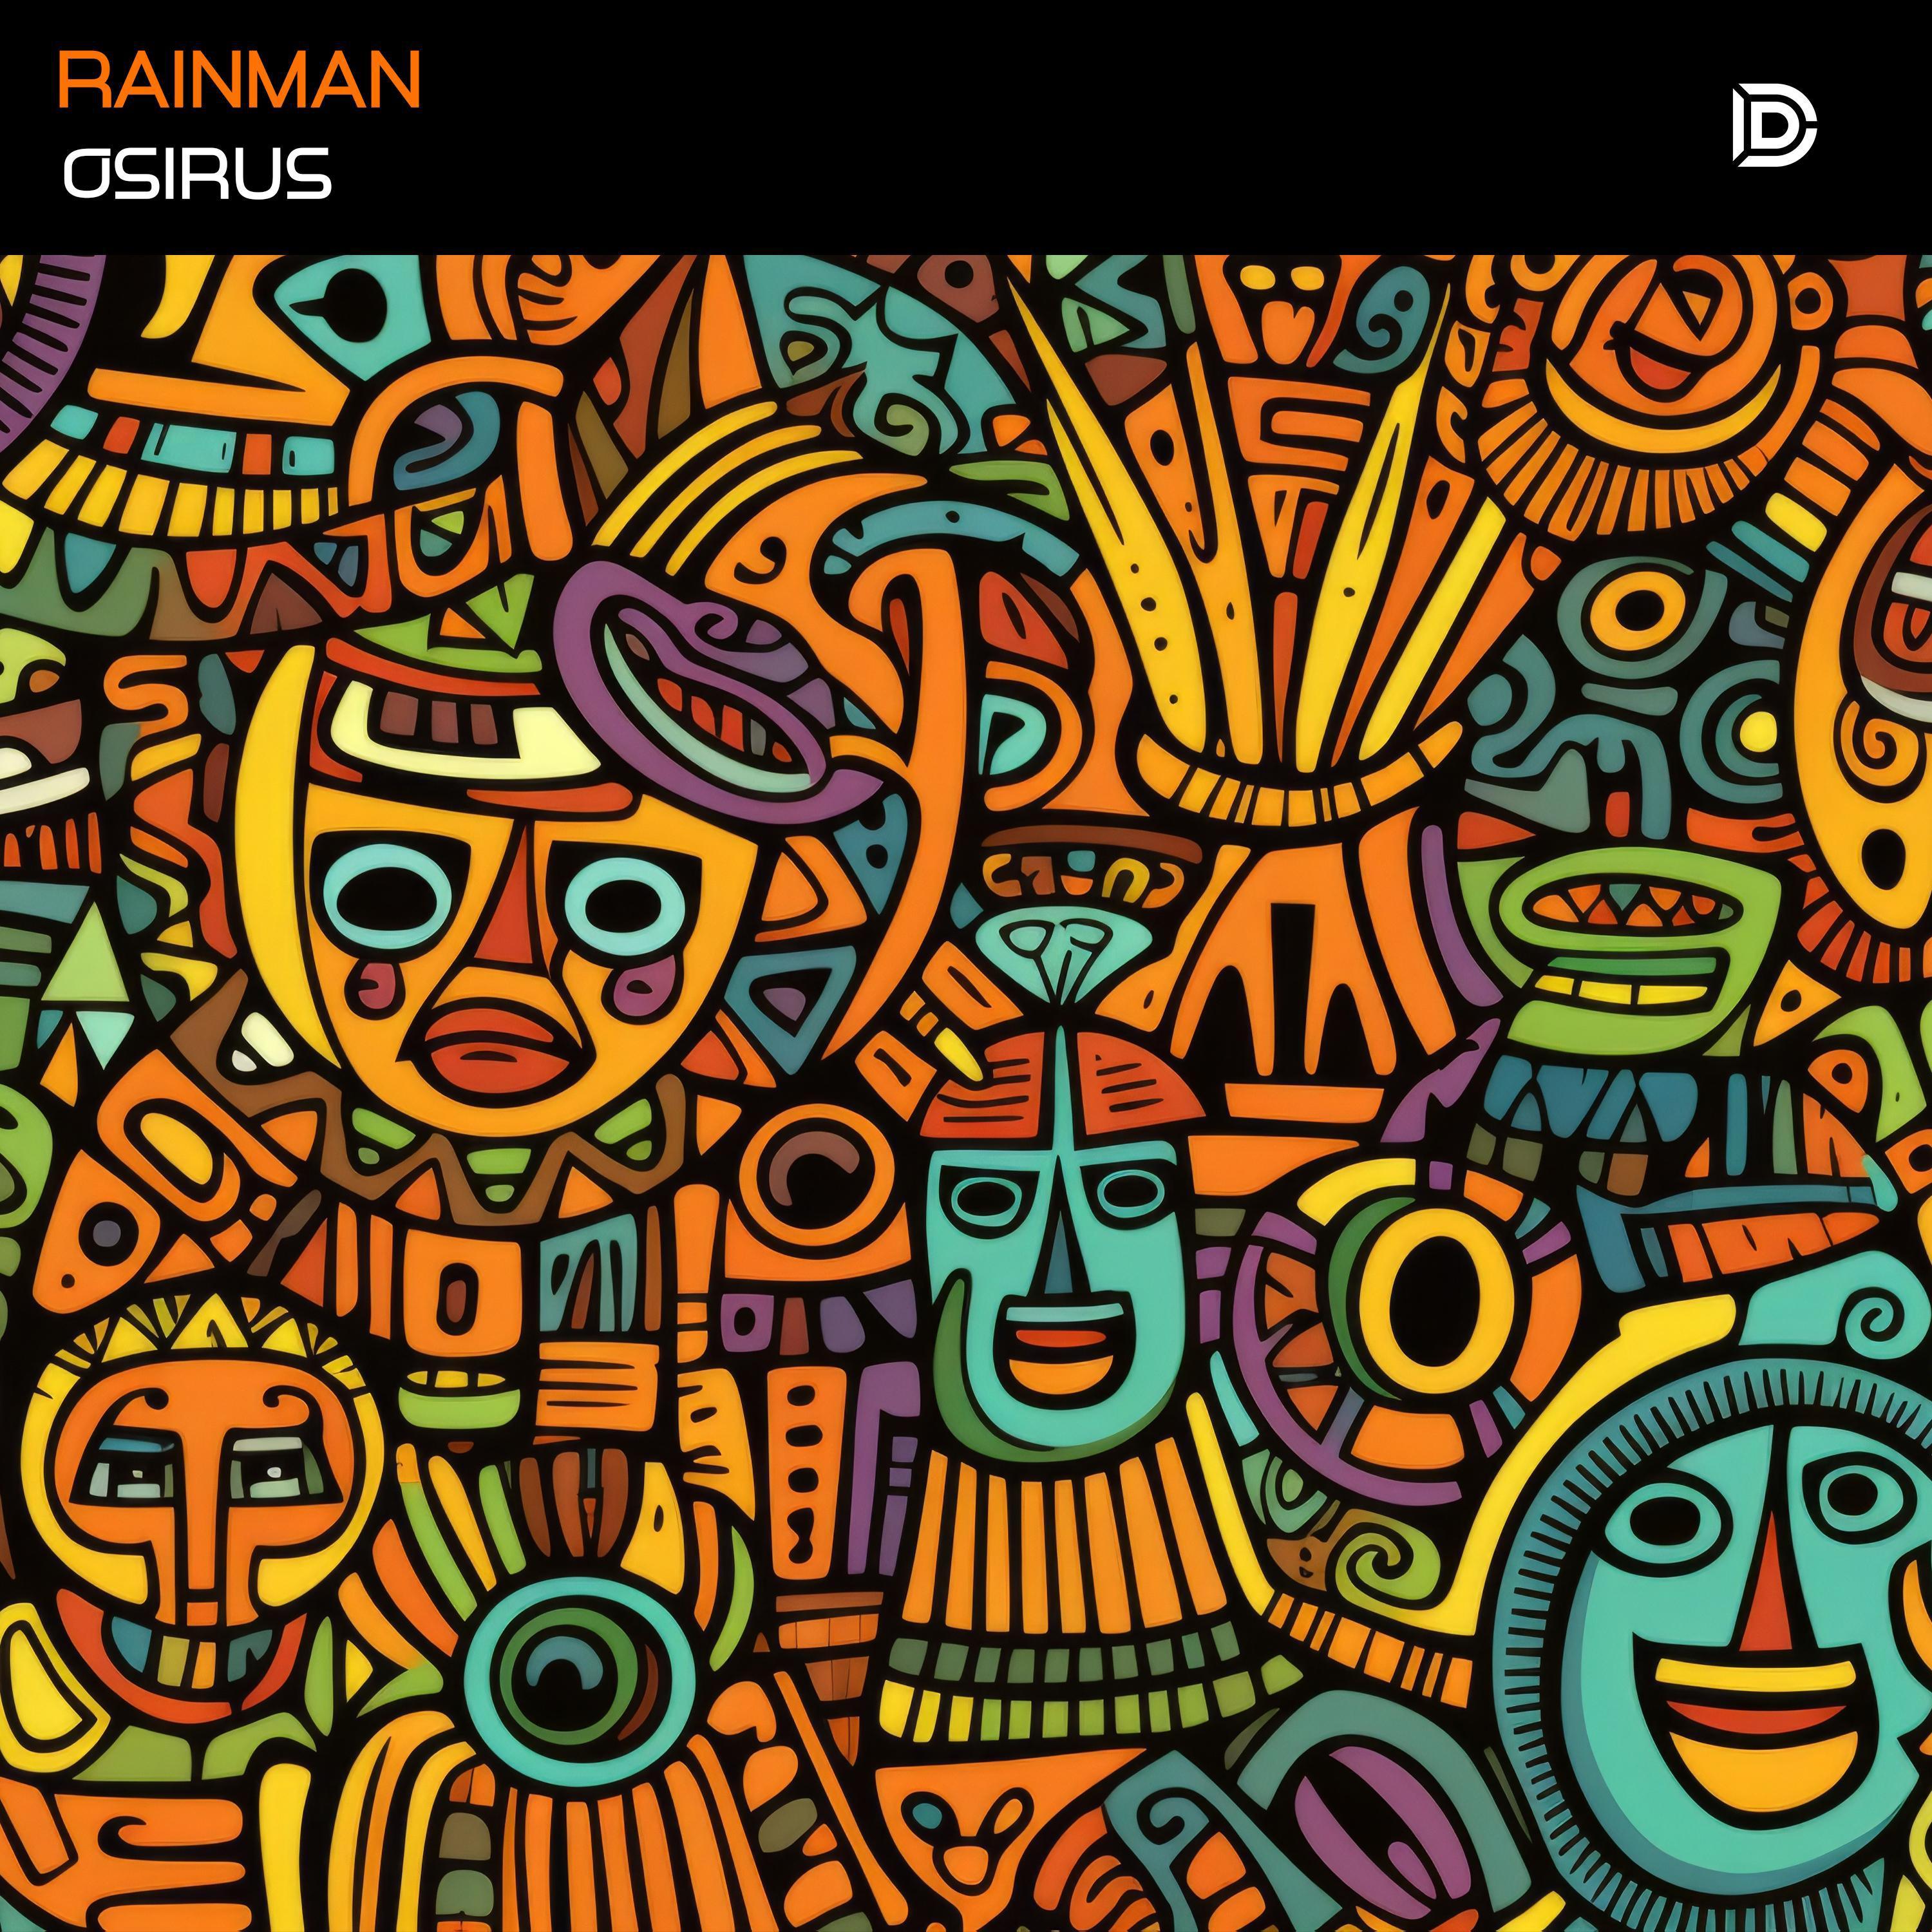 Rainman - Osiris